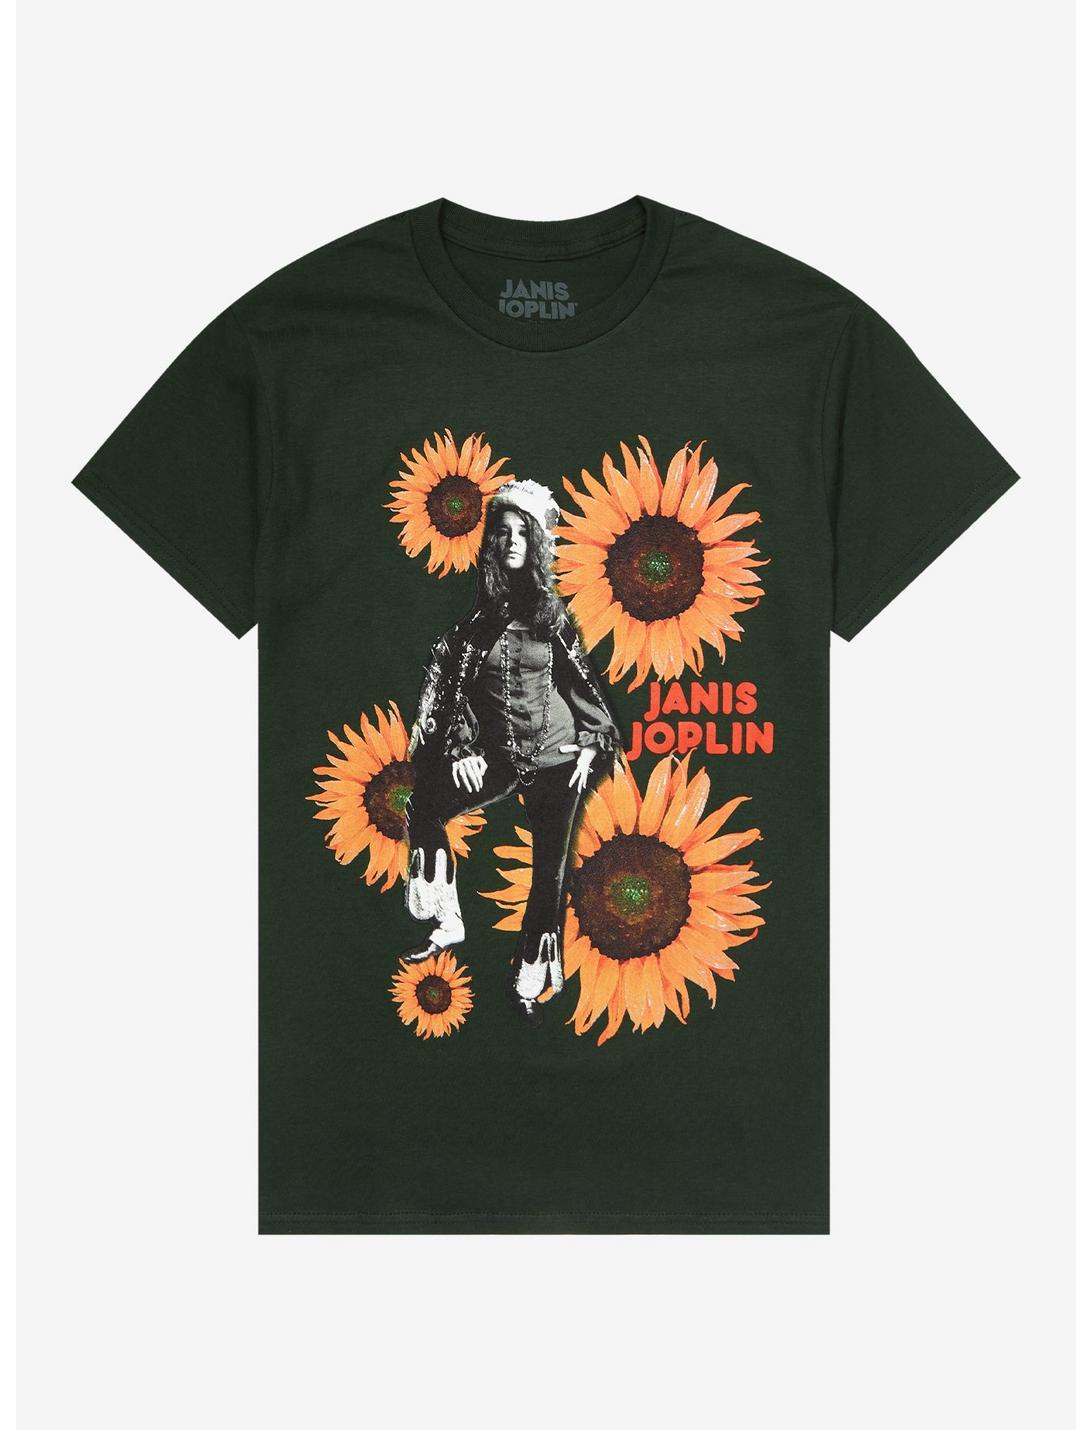 Janis Joplin Sunflowers Boyfriend Fit Girls T-Shirt, DARK GREEN, hi-res